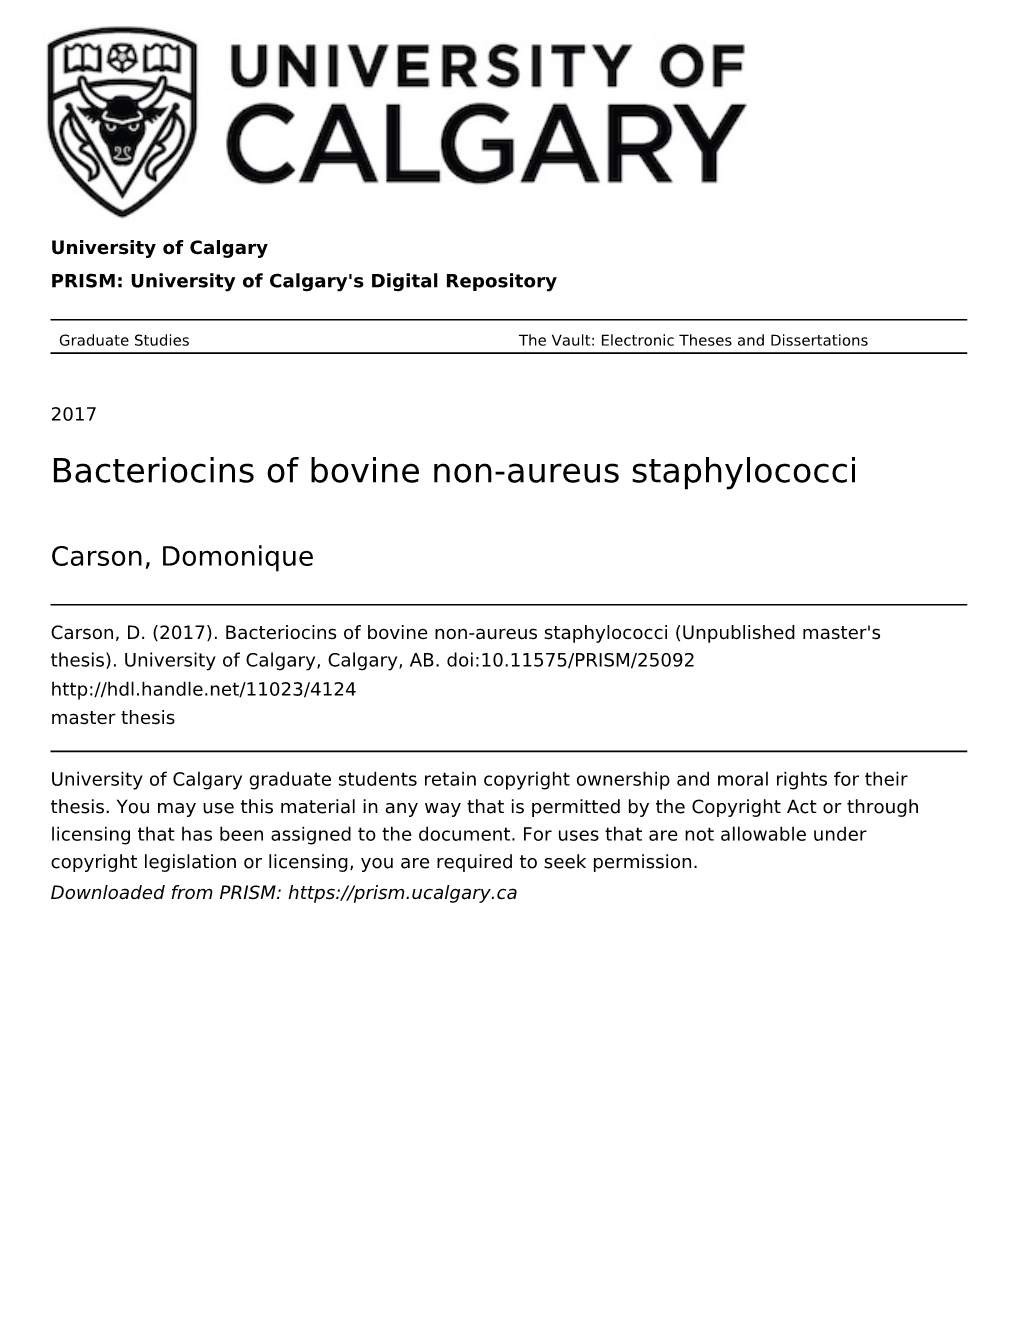 Bacteriocins of Bovine Non-Aureus Staphylococci